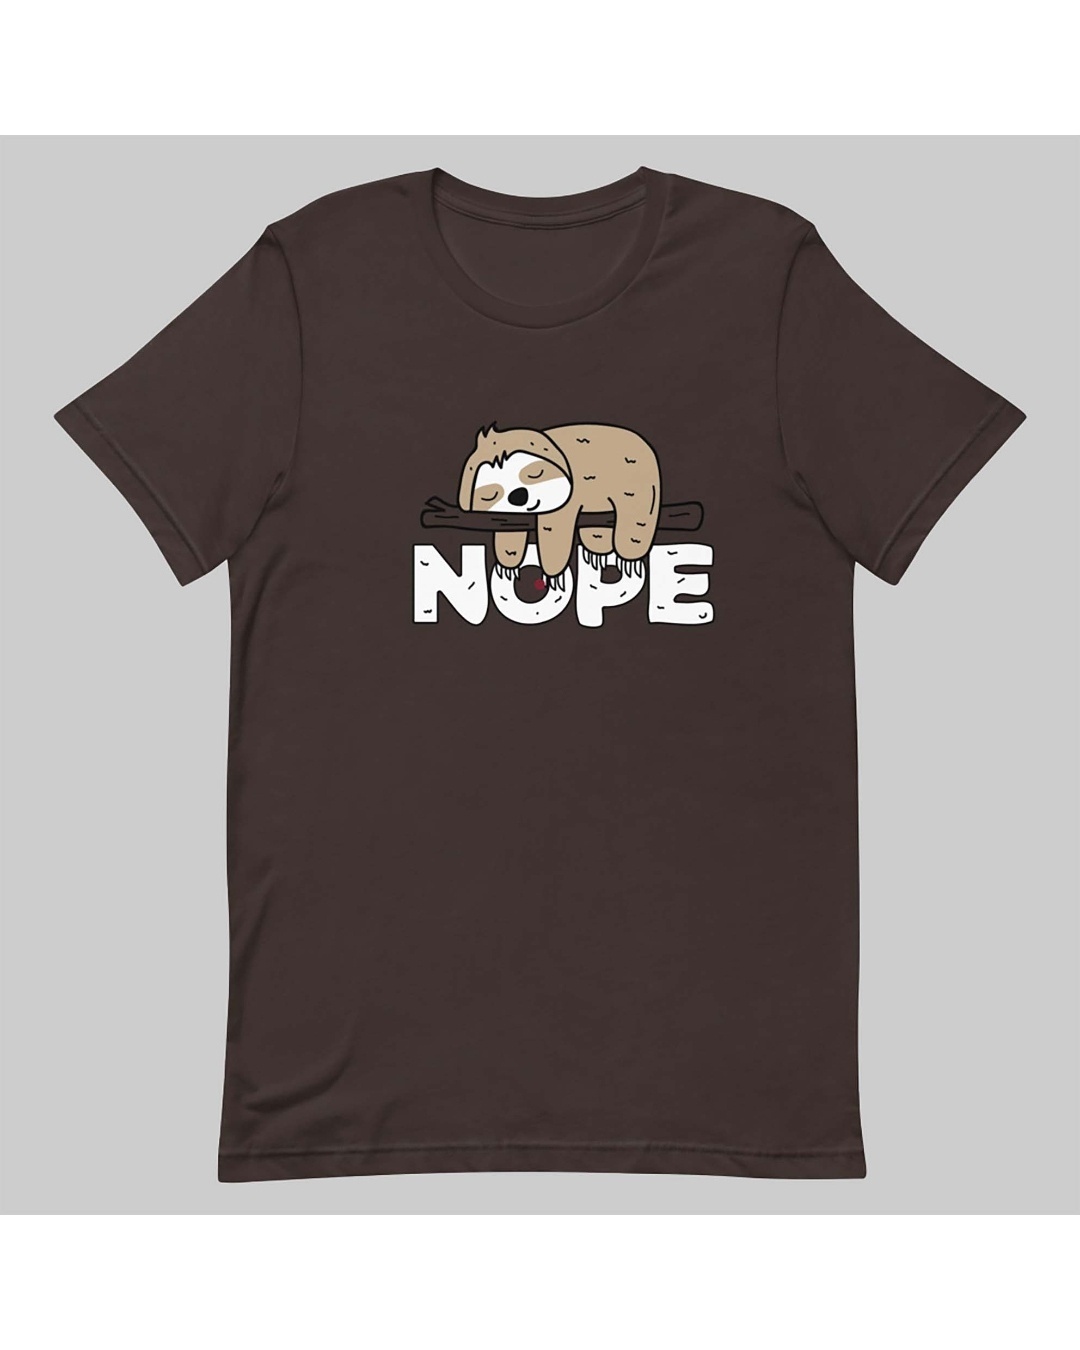 Shop Men's Brown Nope Sloth Typography T-shirt